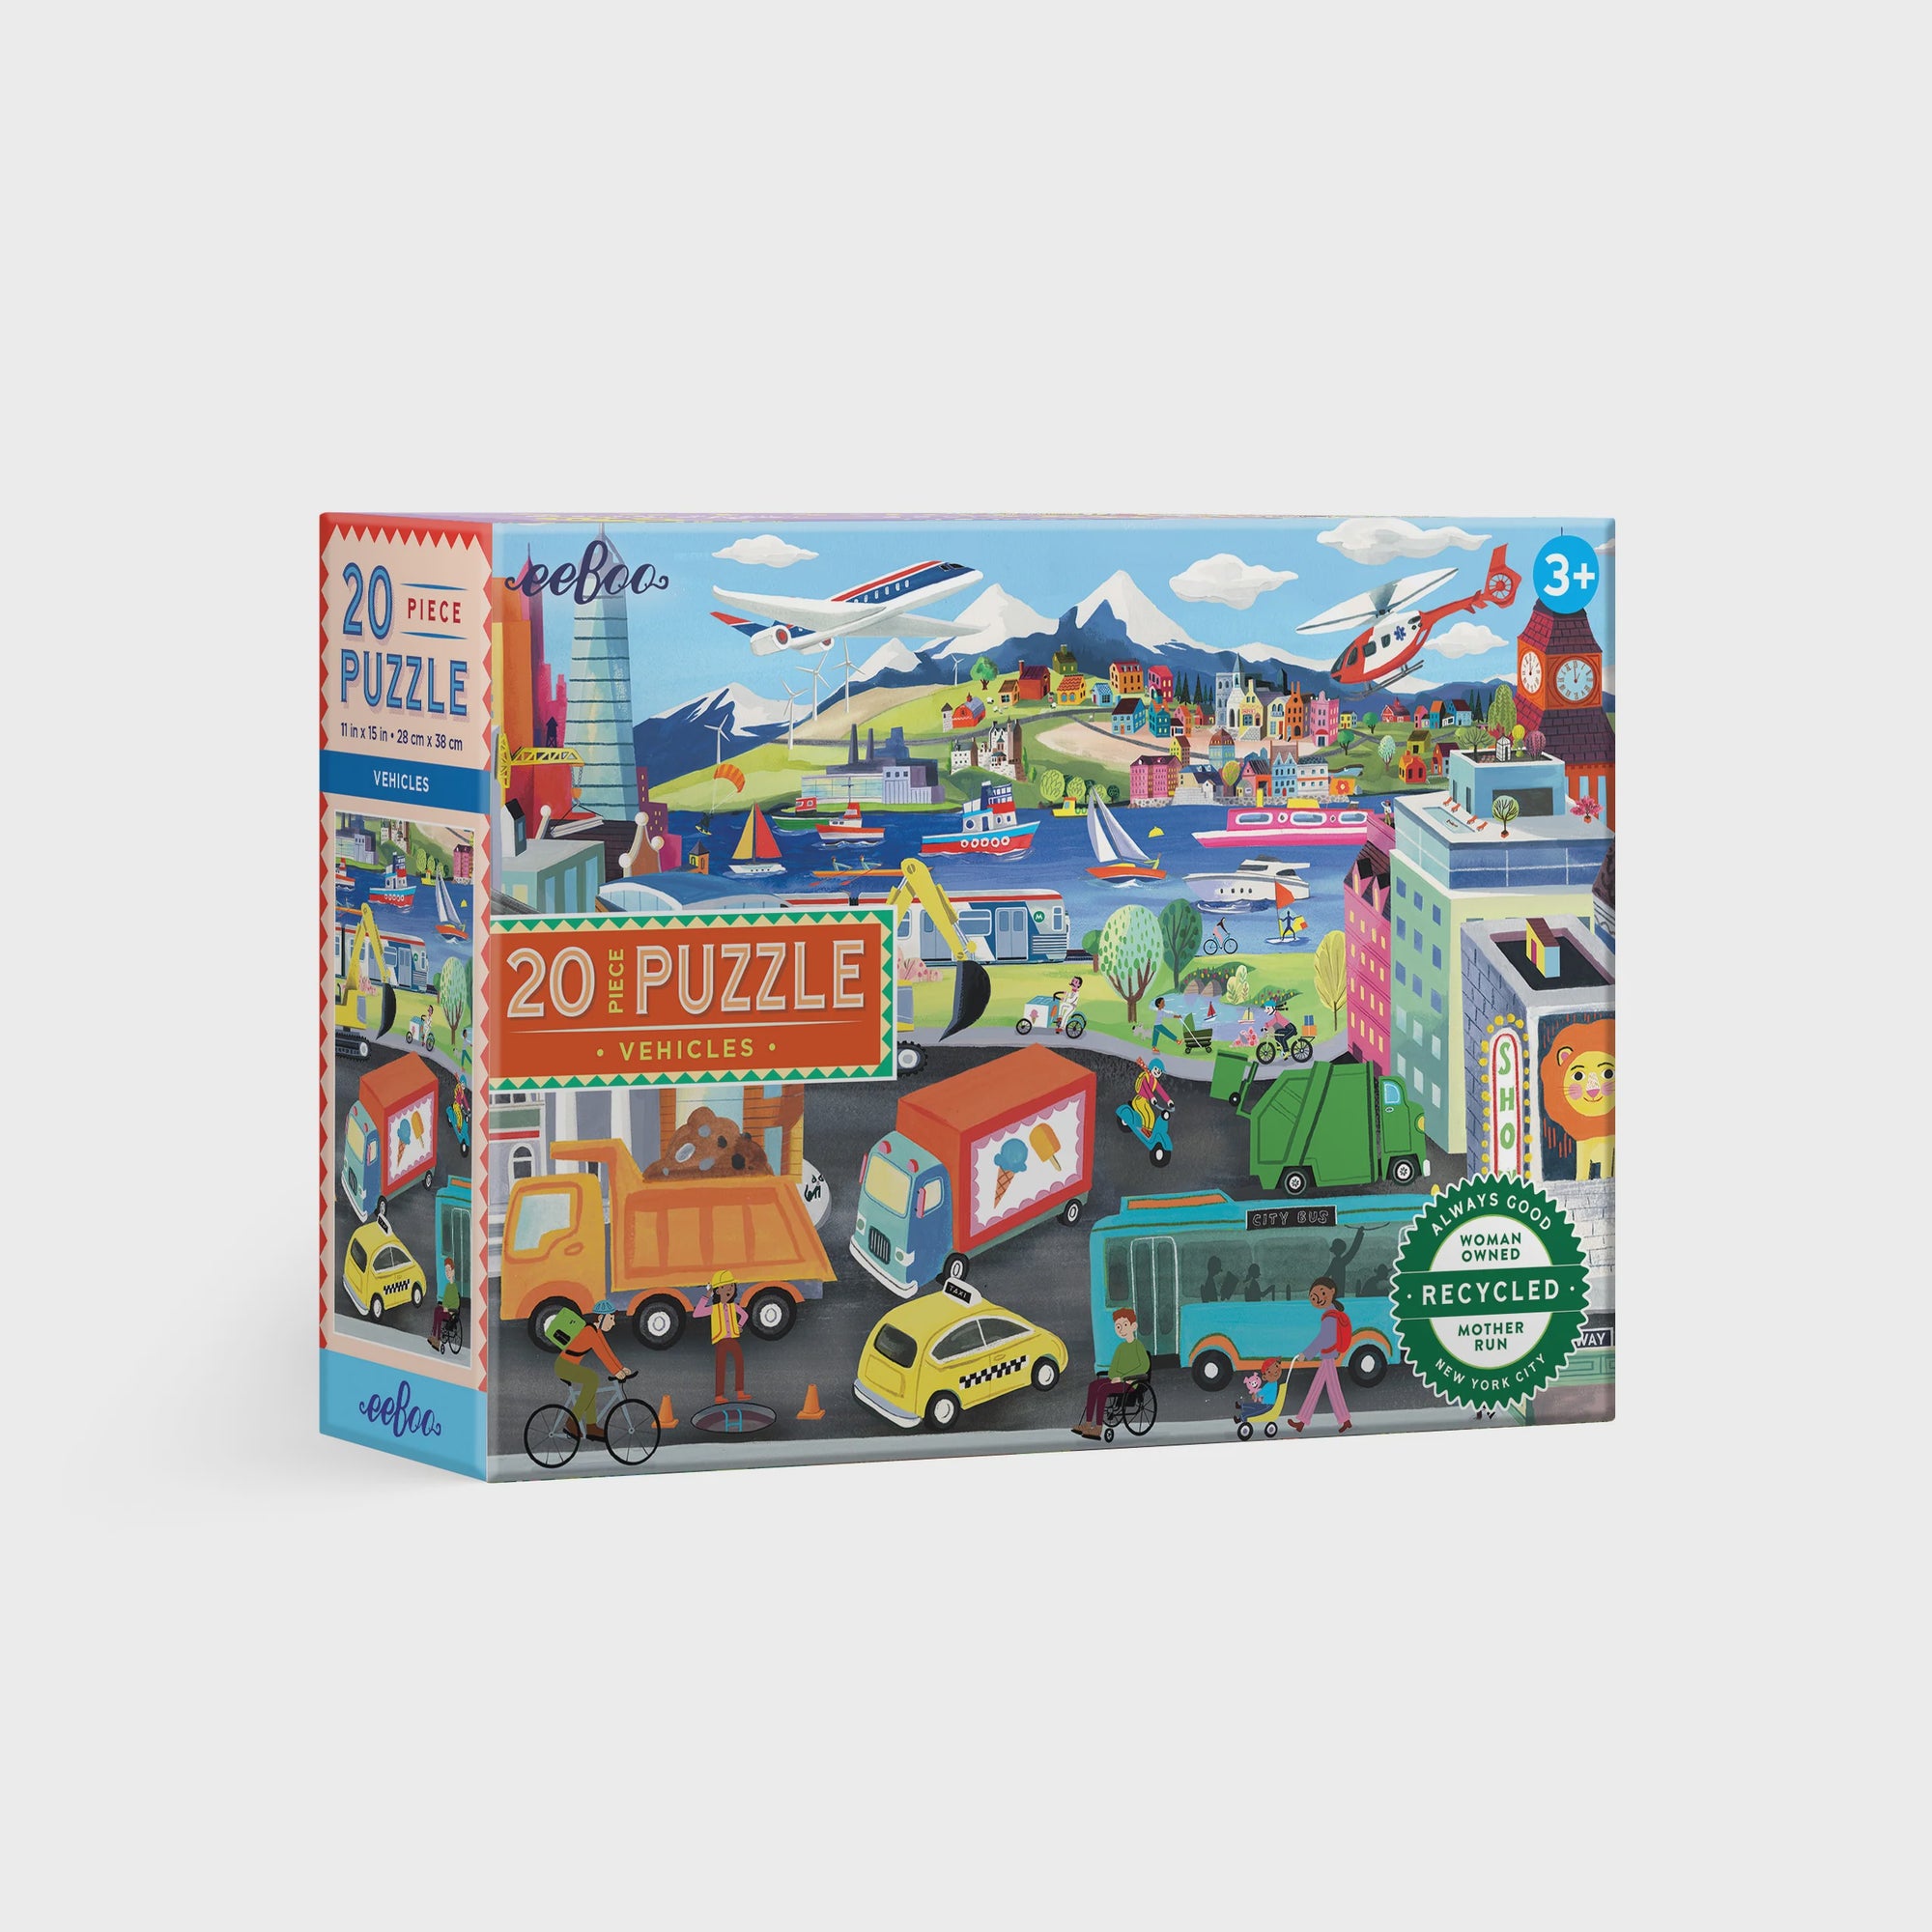 20 Piece Big Puzzle - Vehicles